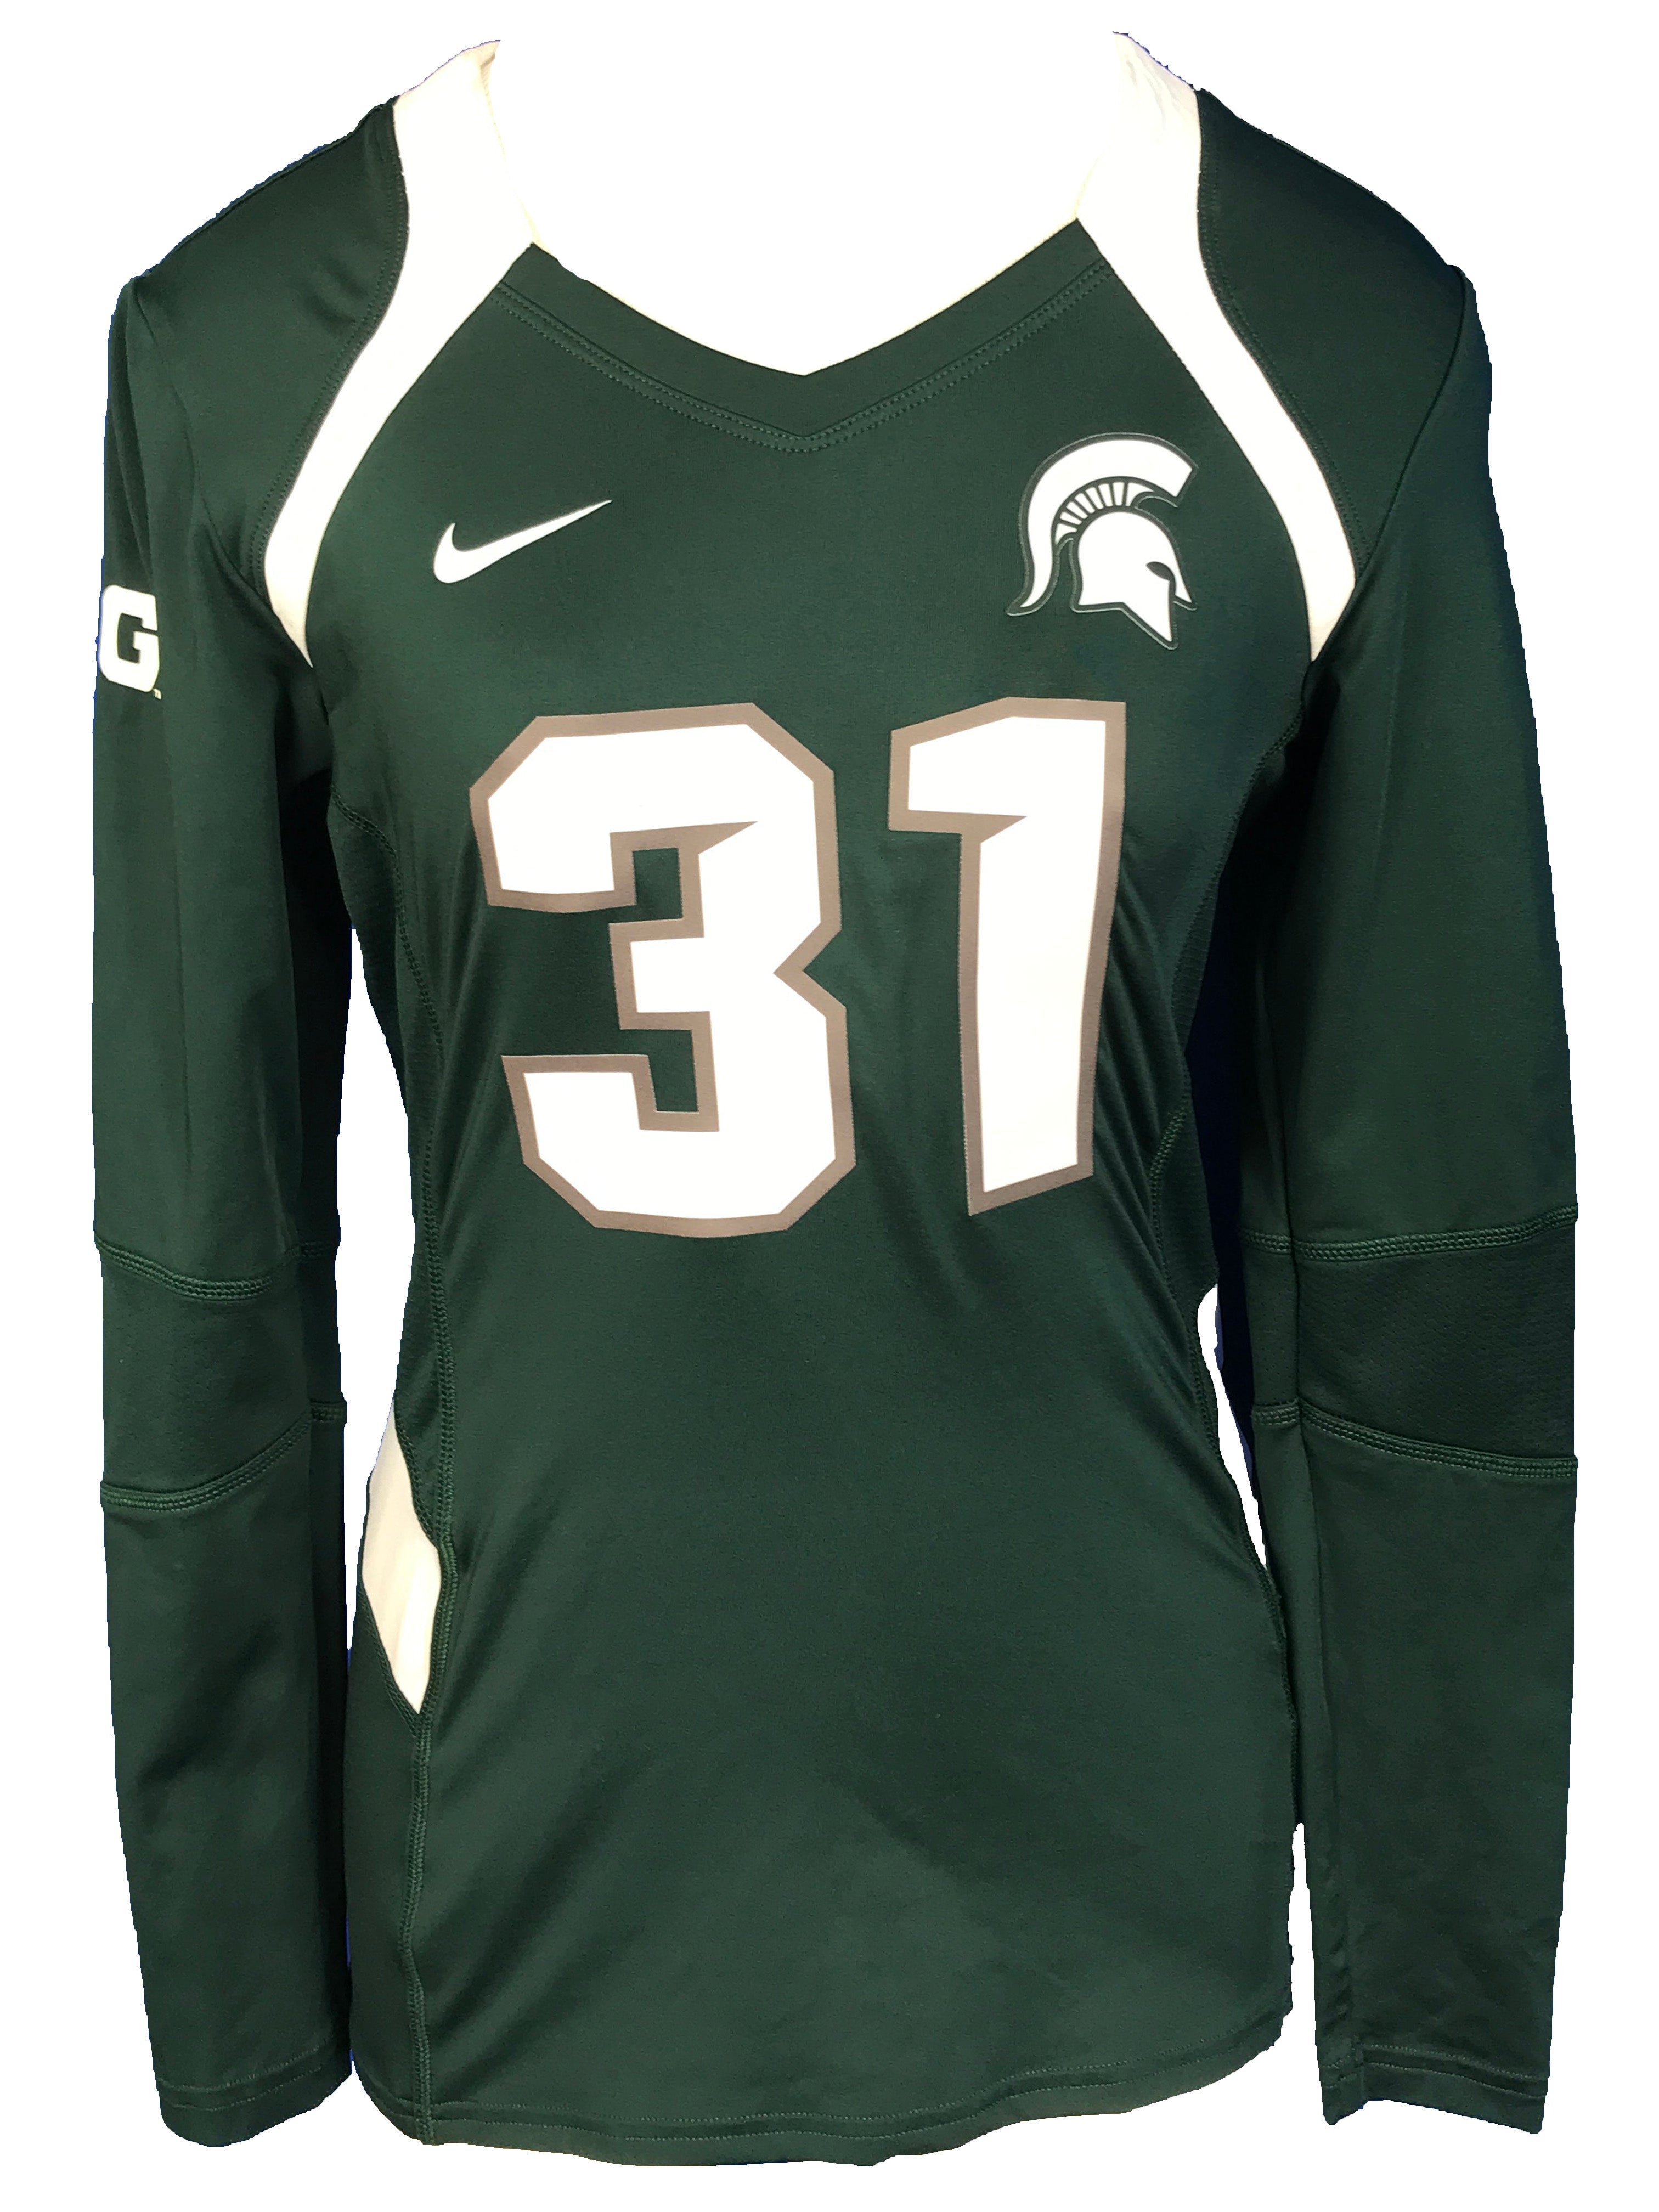 Nike Green Long Sleeve Volleyball Jersey #31 Women's Size M